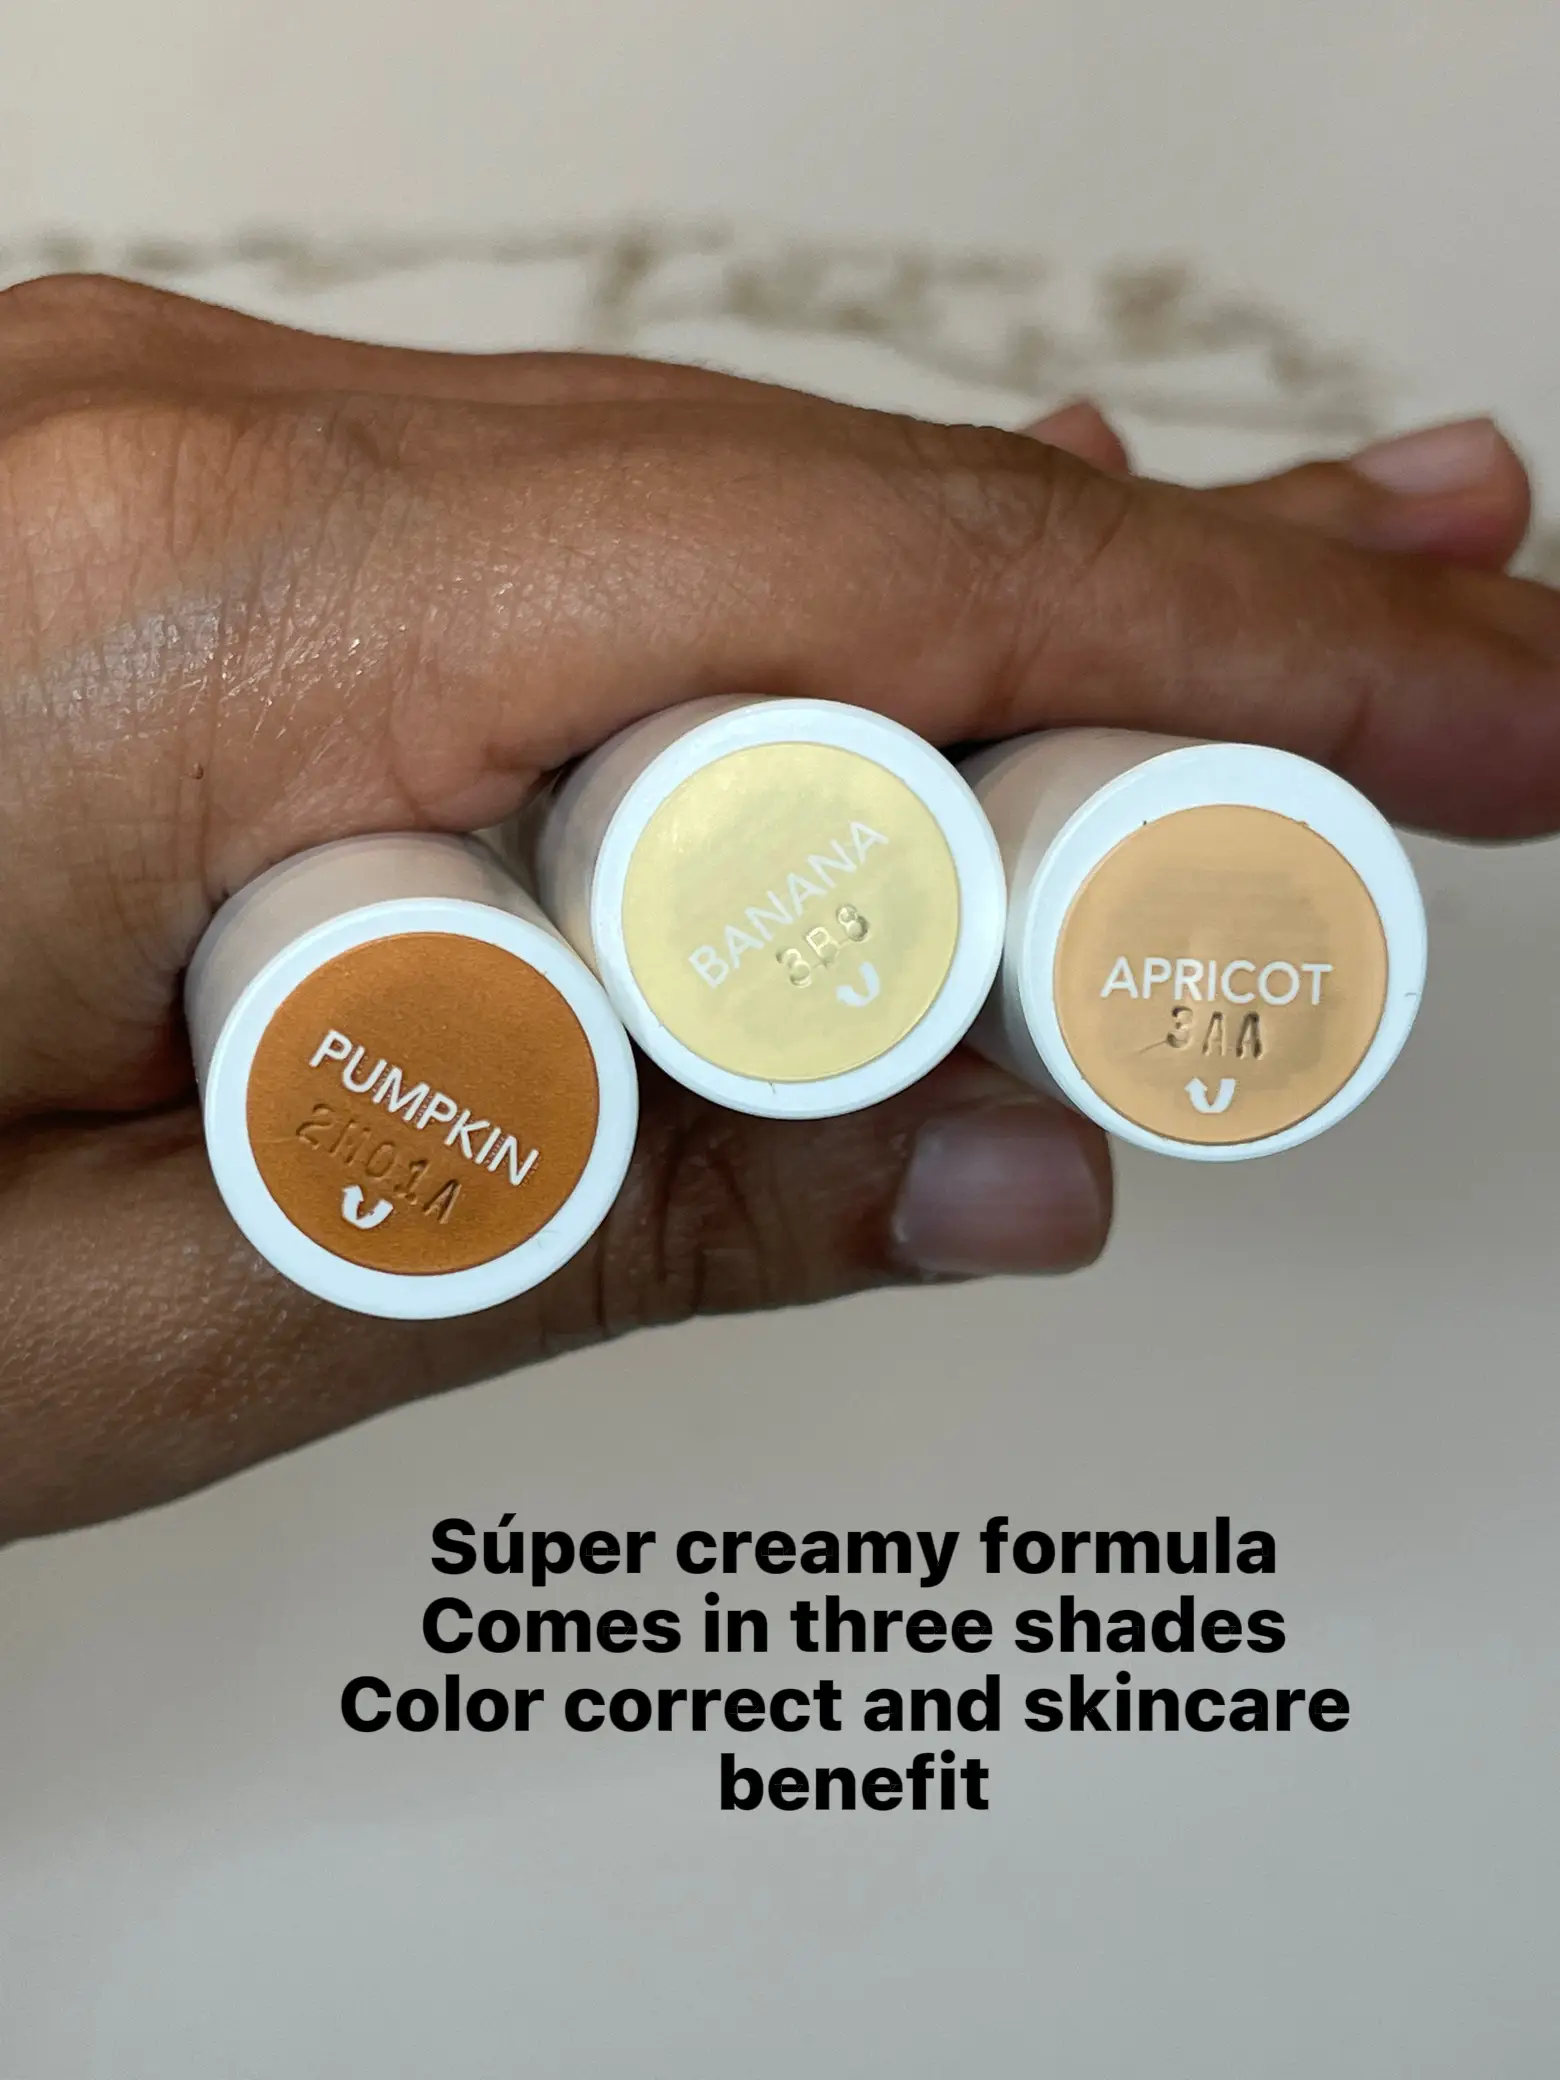 Olehenriksen launches colour correcting eye cream